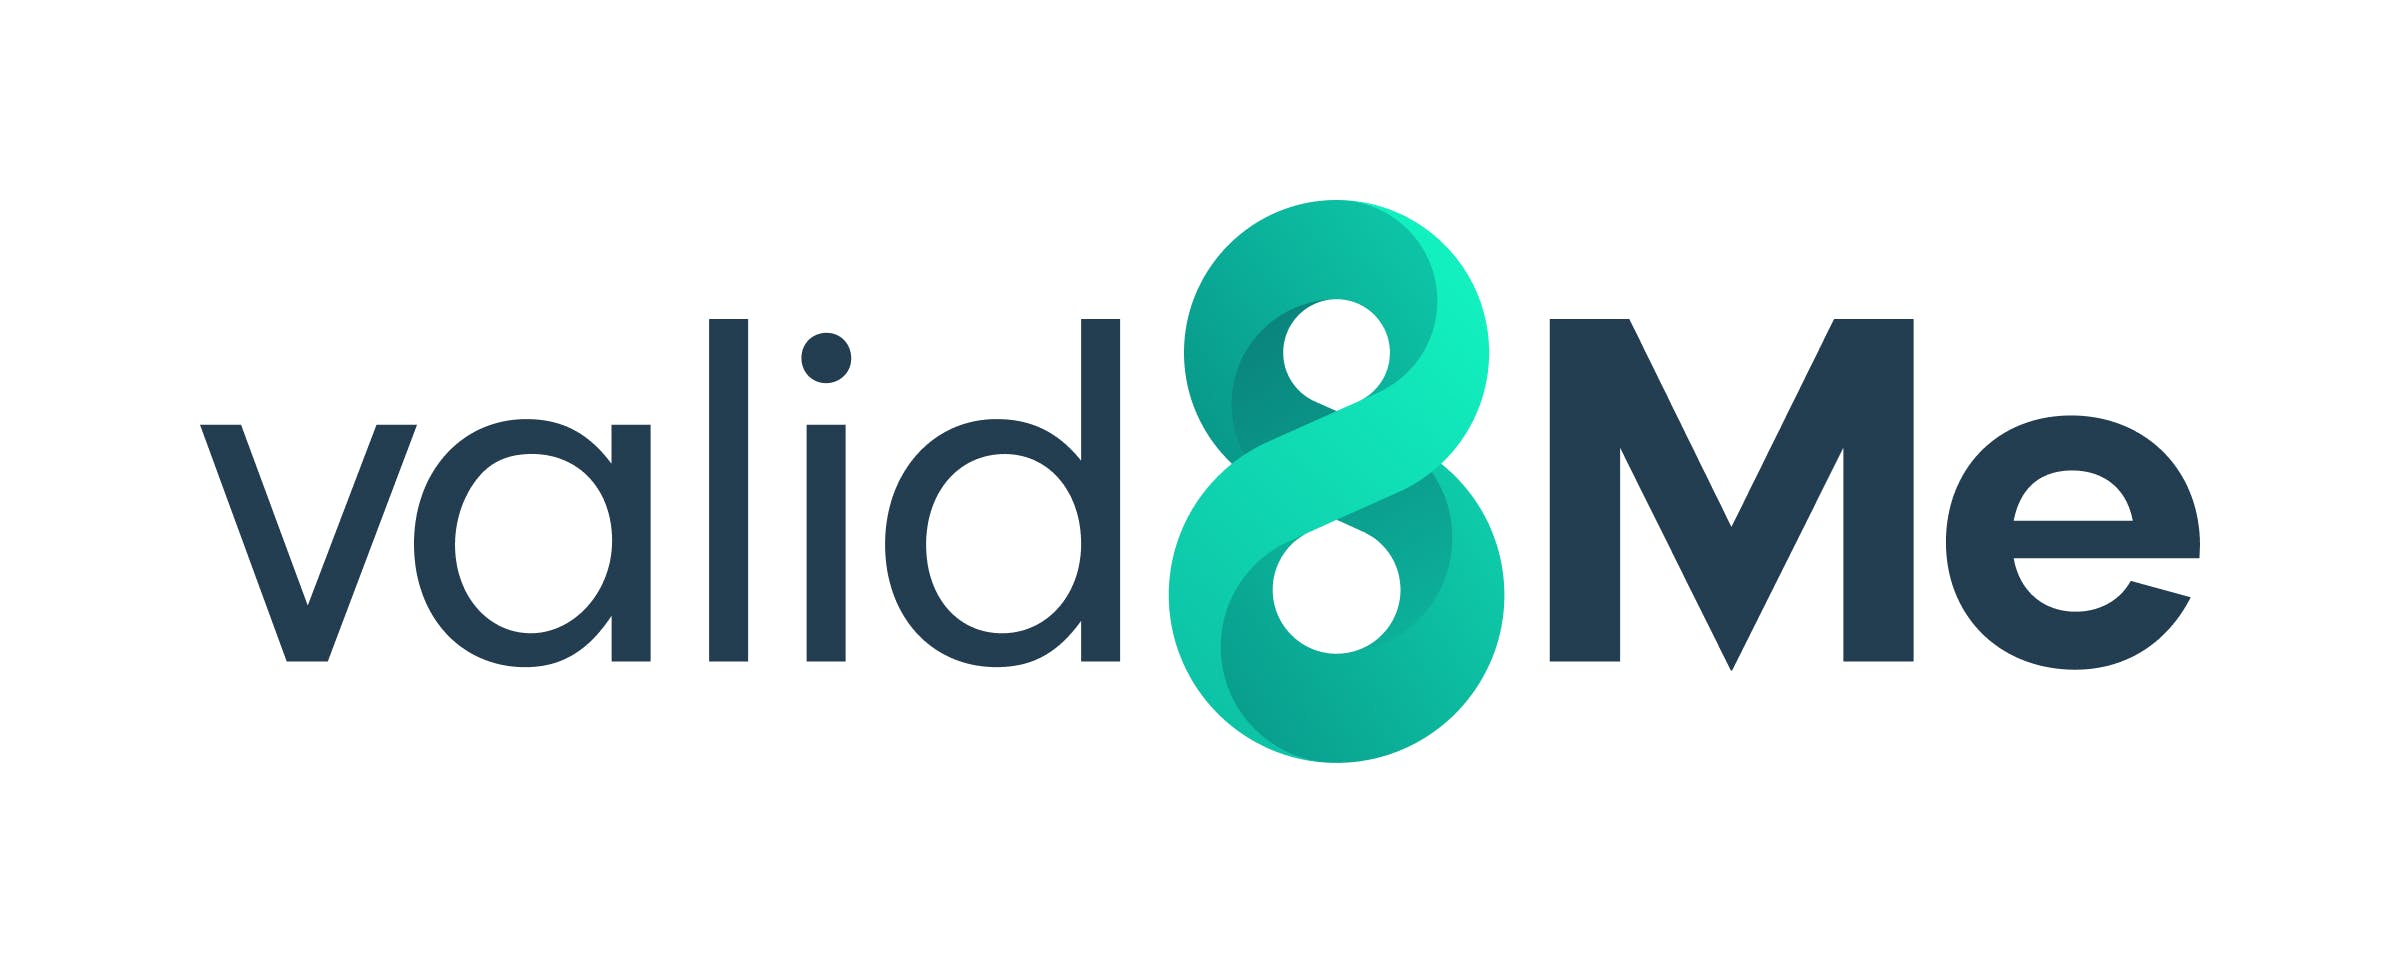 Valid8me logo